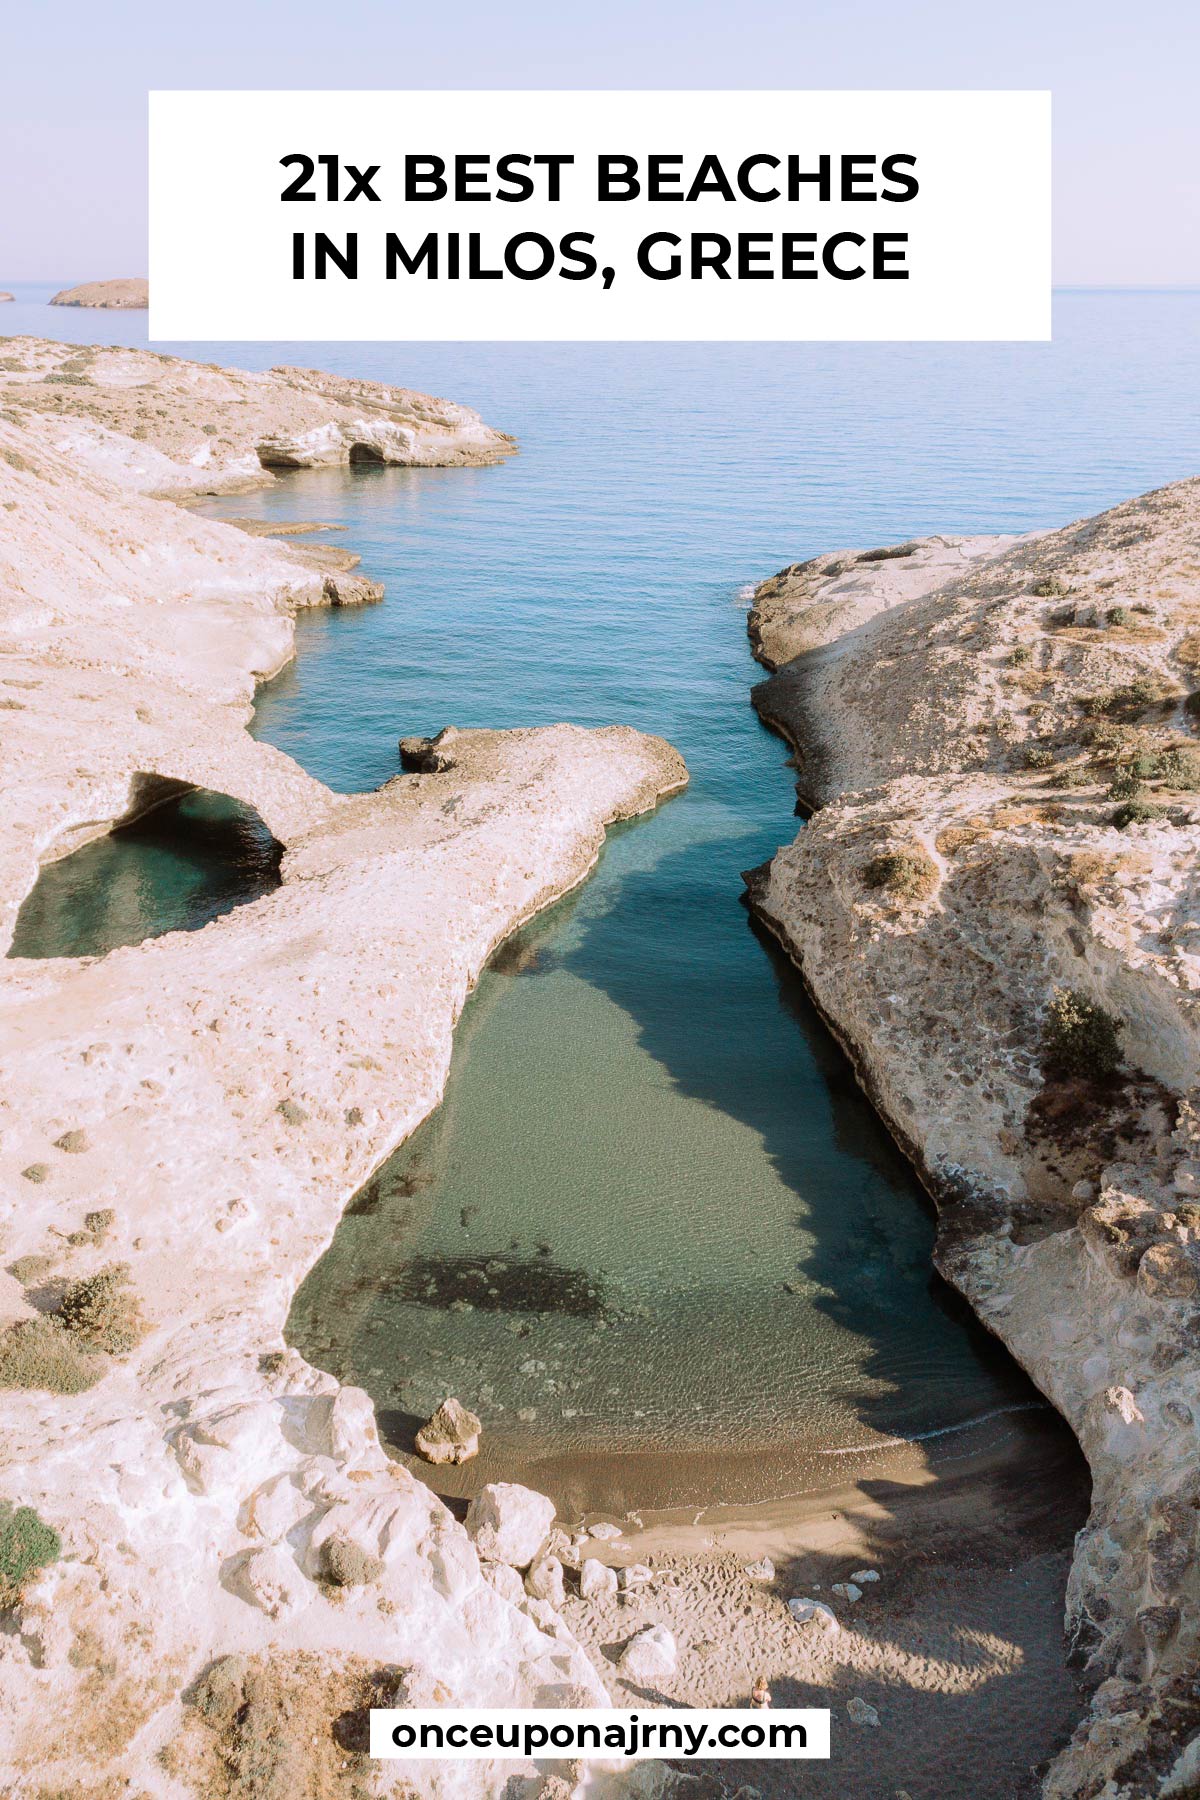 Best beaches in milos greece